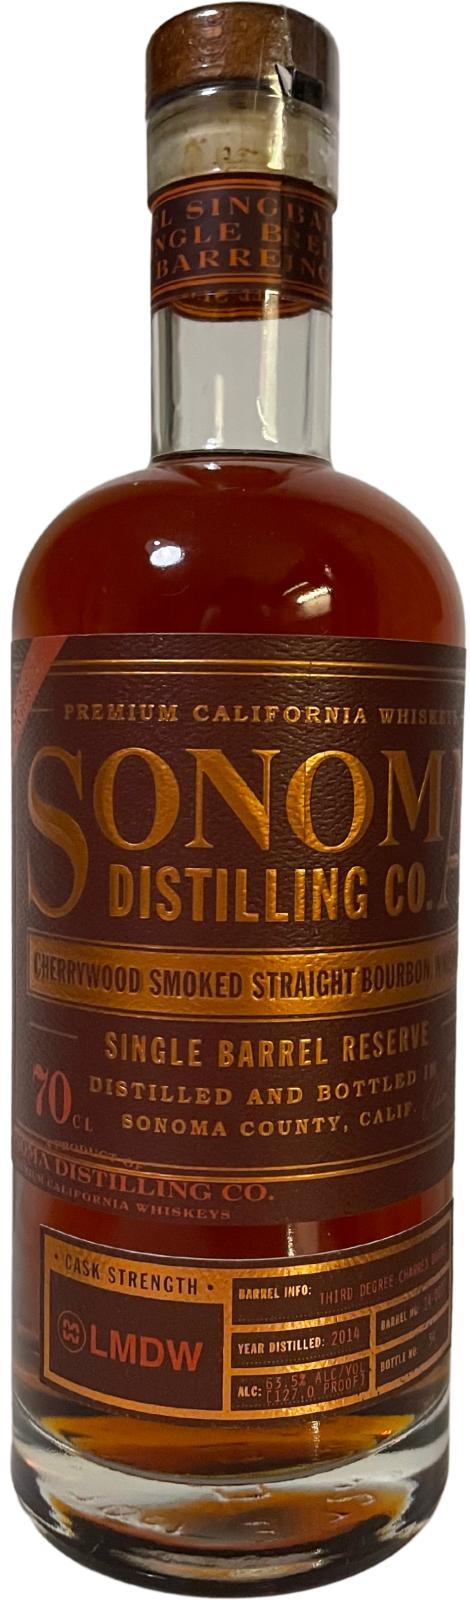 Sonoma Distilling Co. Cherrywood Smoked straight Bourbon Whiskey Single Barrel Reserve Cask Strength The Bourbon Enthusiast ( Barrel # 15-0463) 2015 750 ml